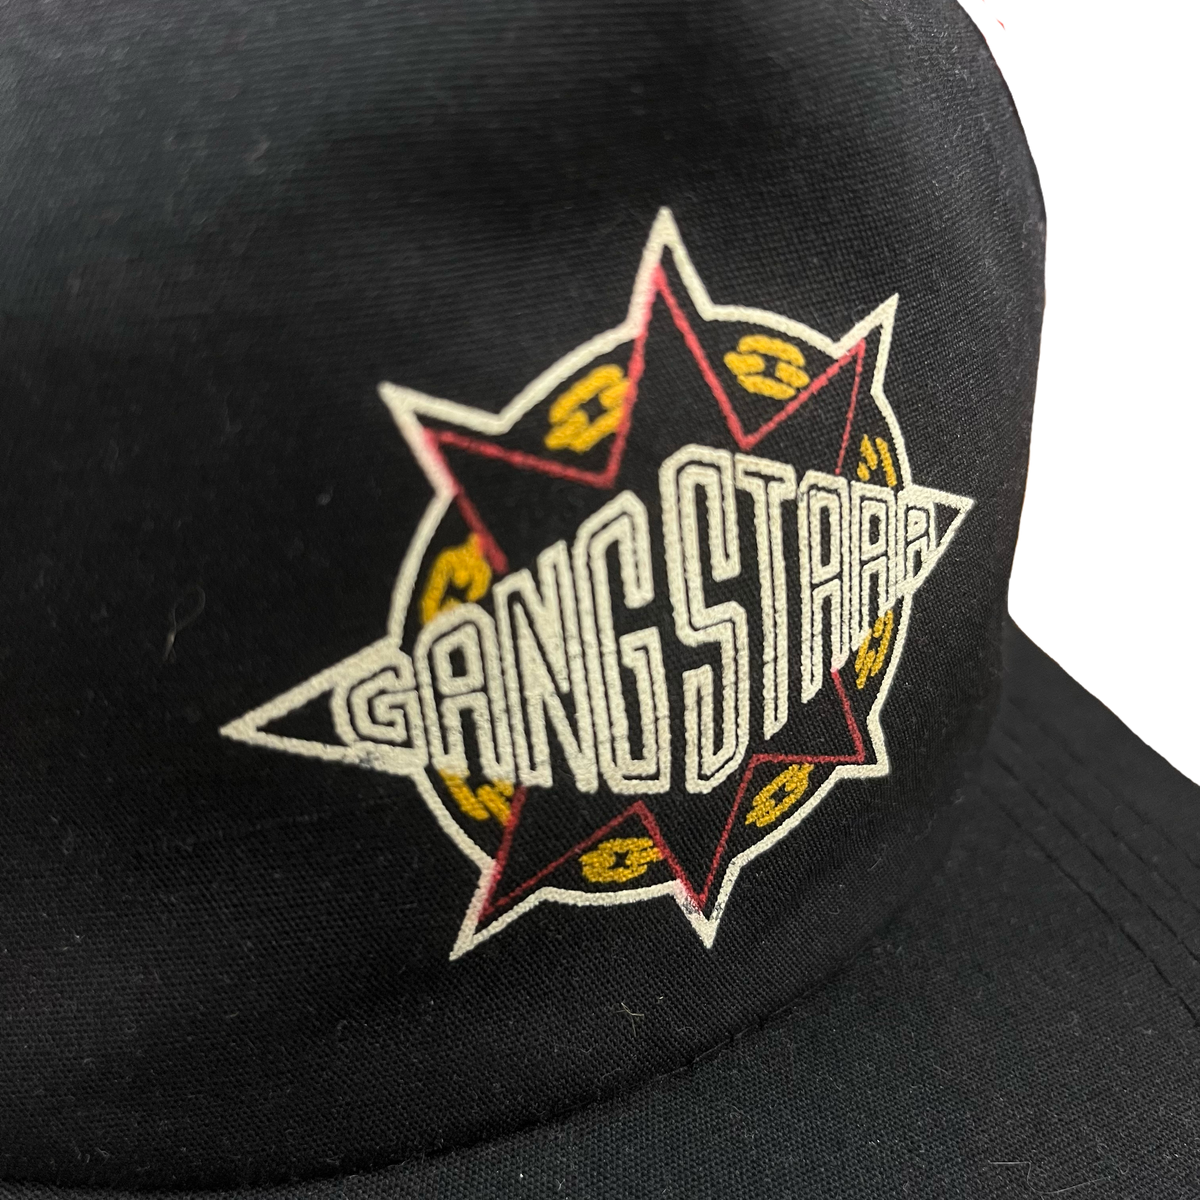 Vintage 1990 Gang Starr “Step In The Arena” Snapback Hat